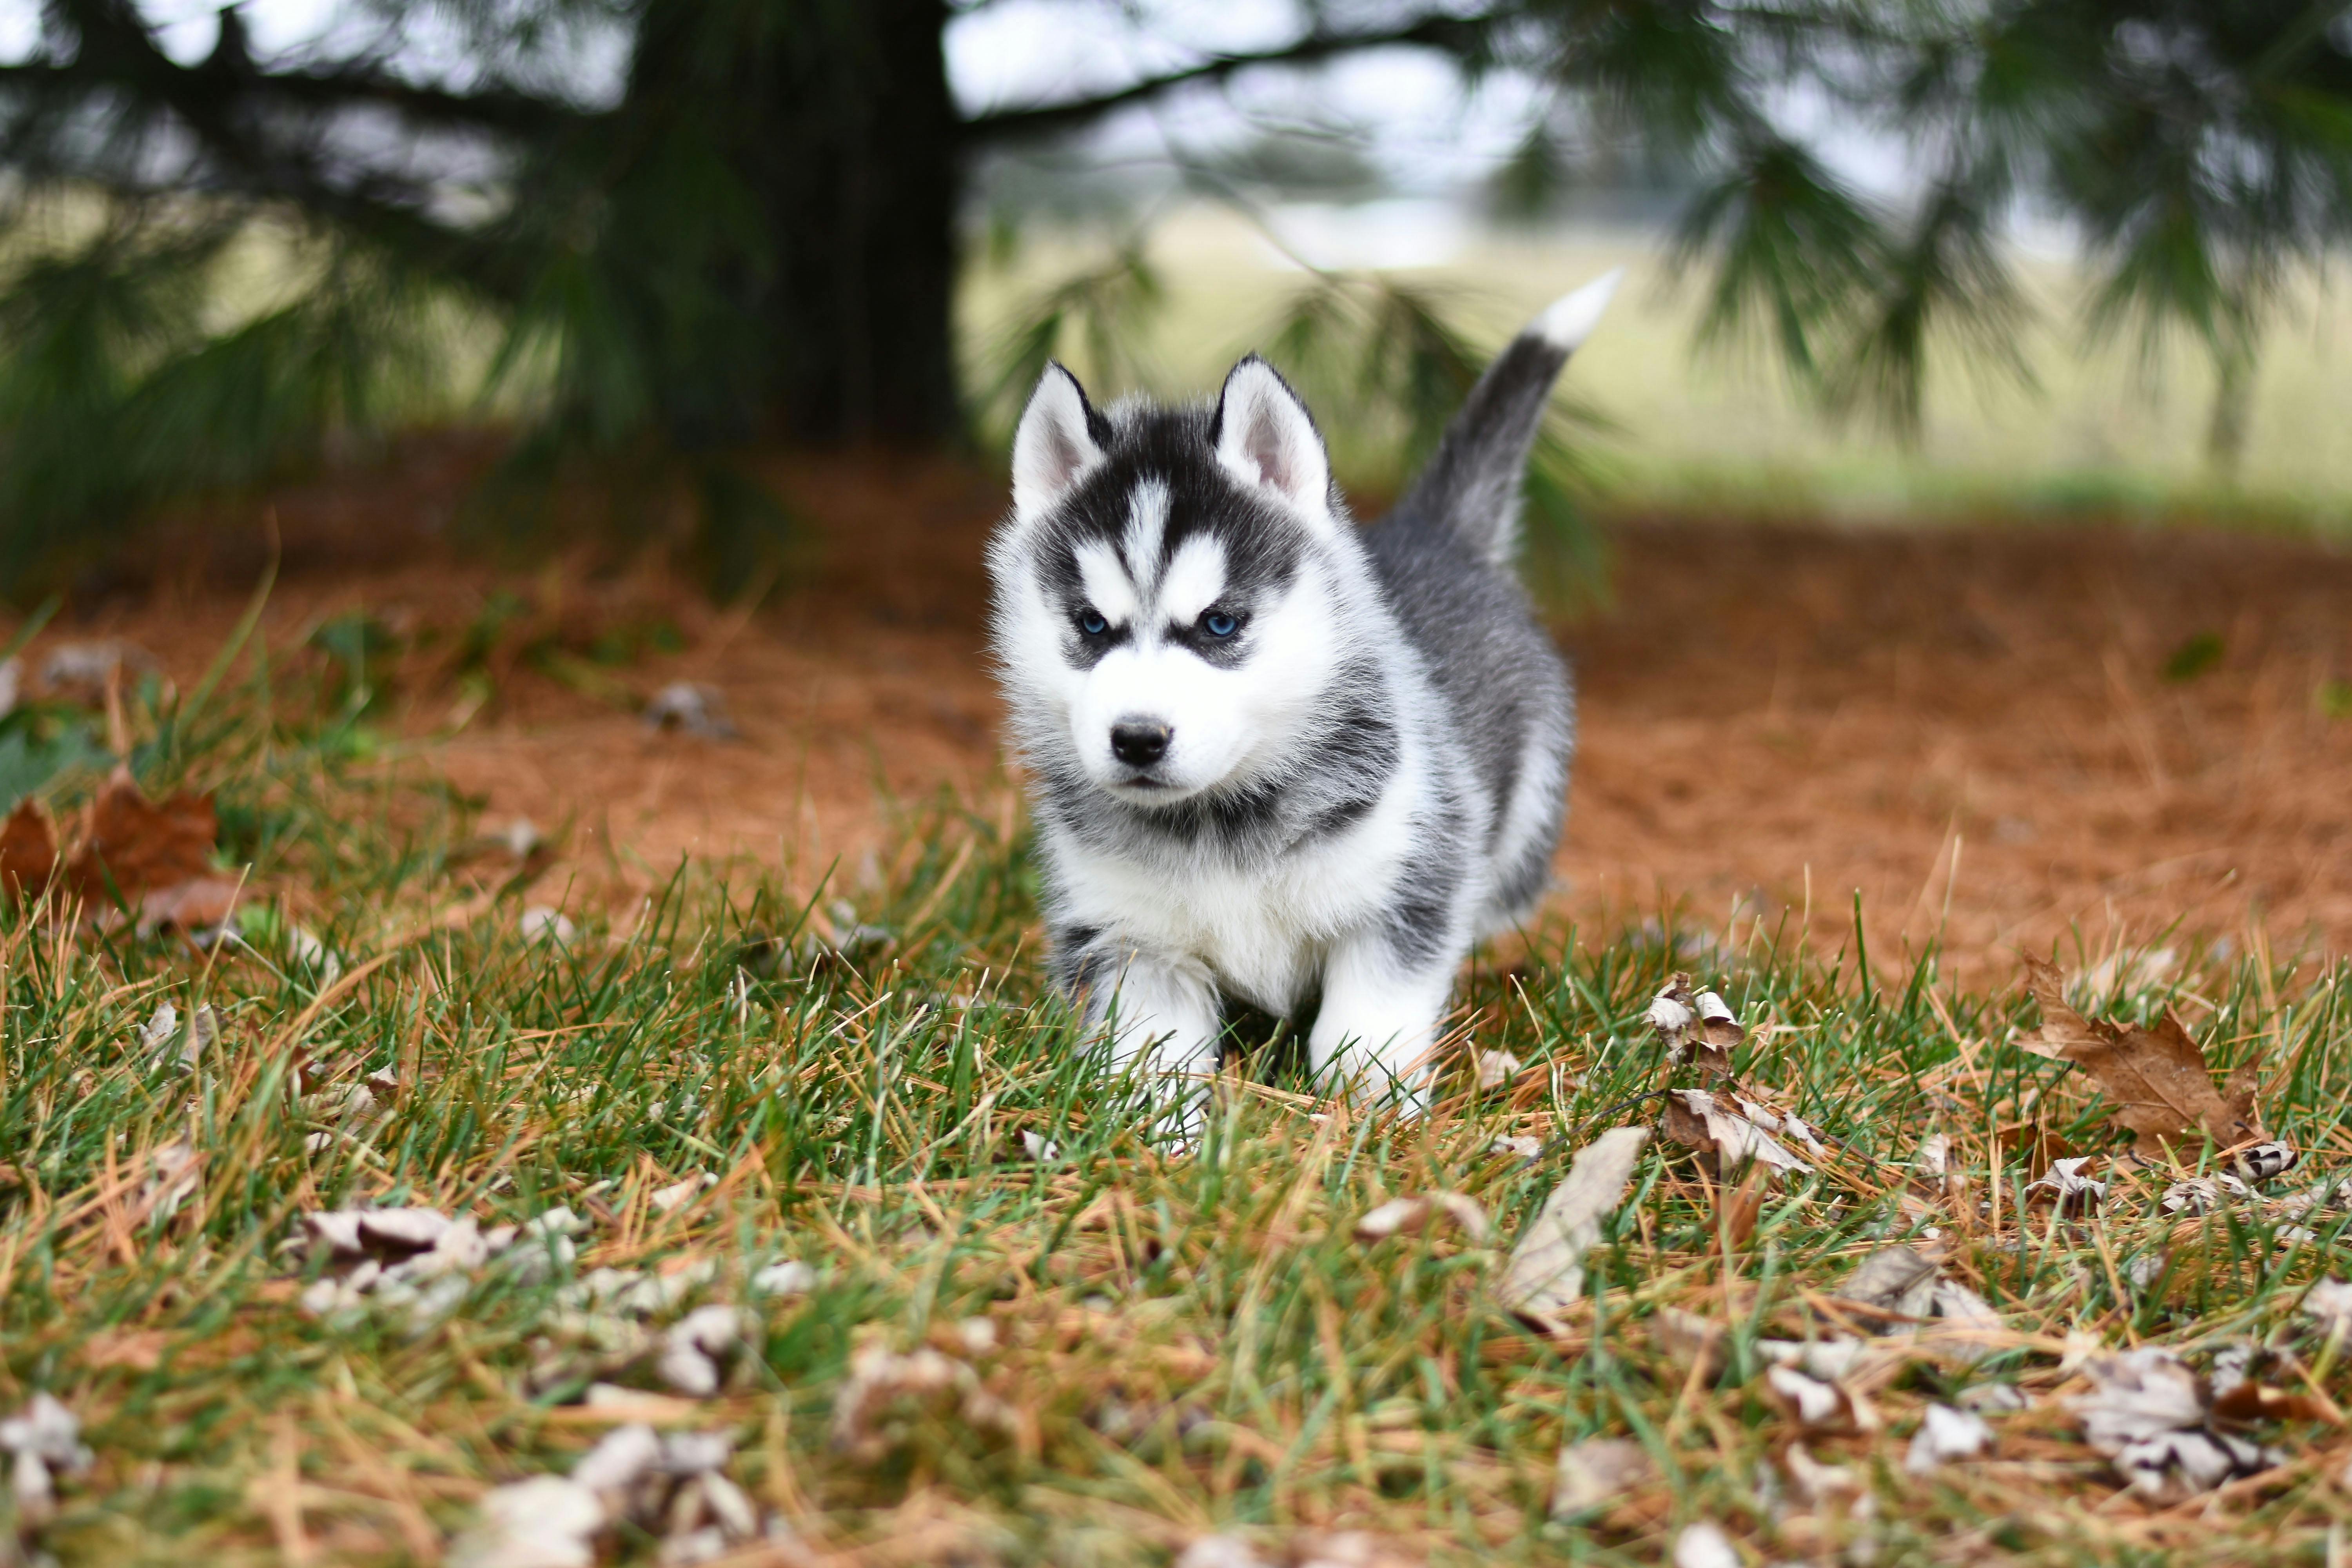 black and white husky puppy